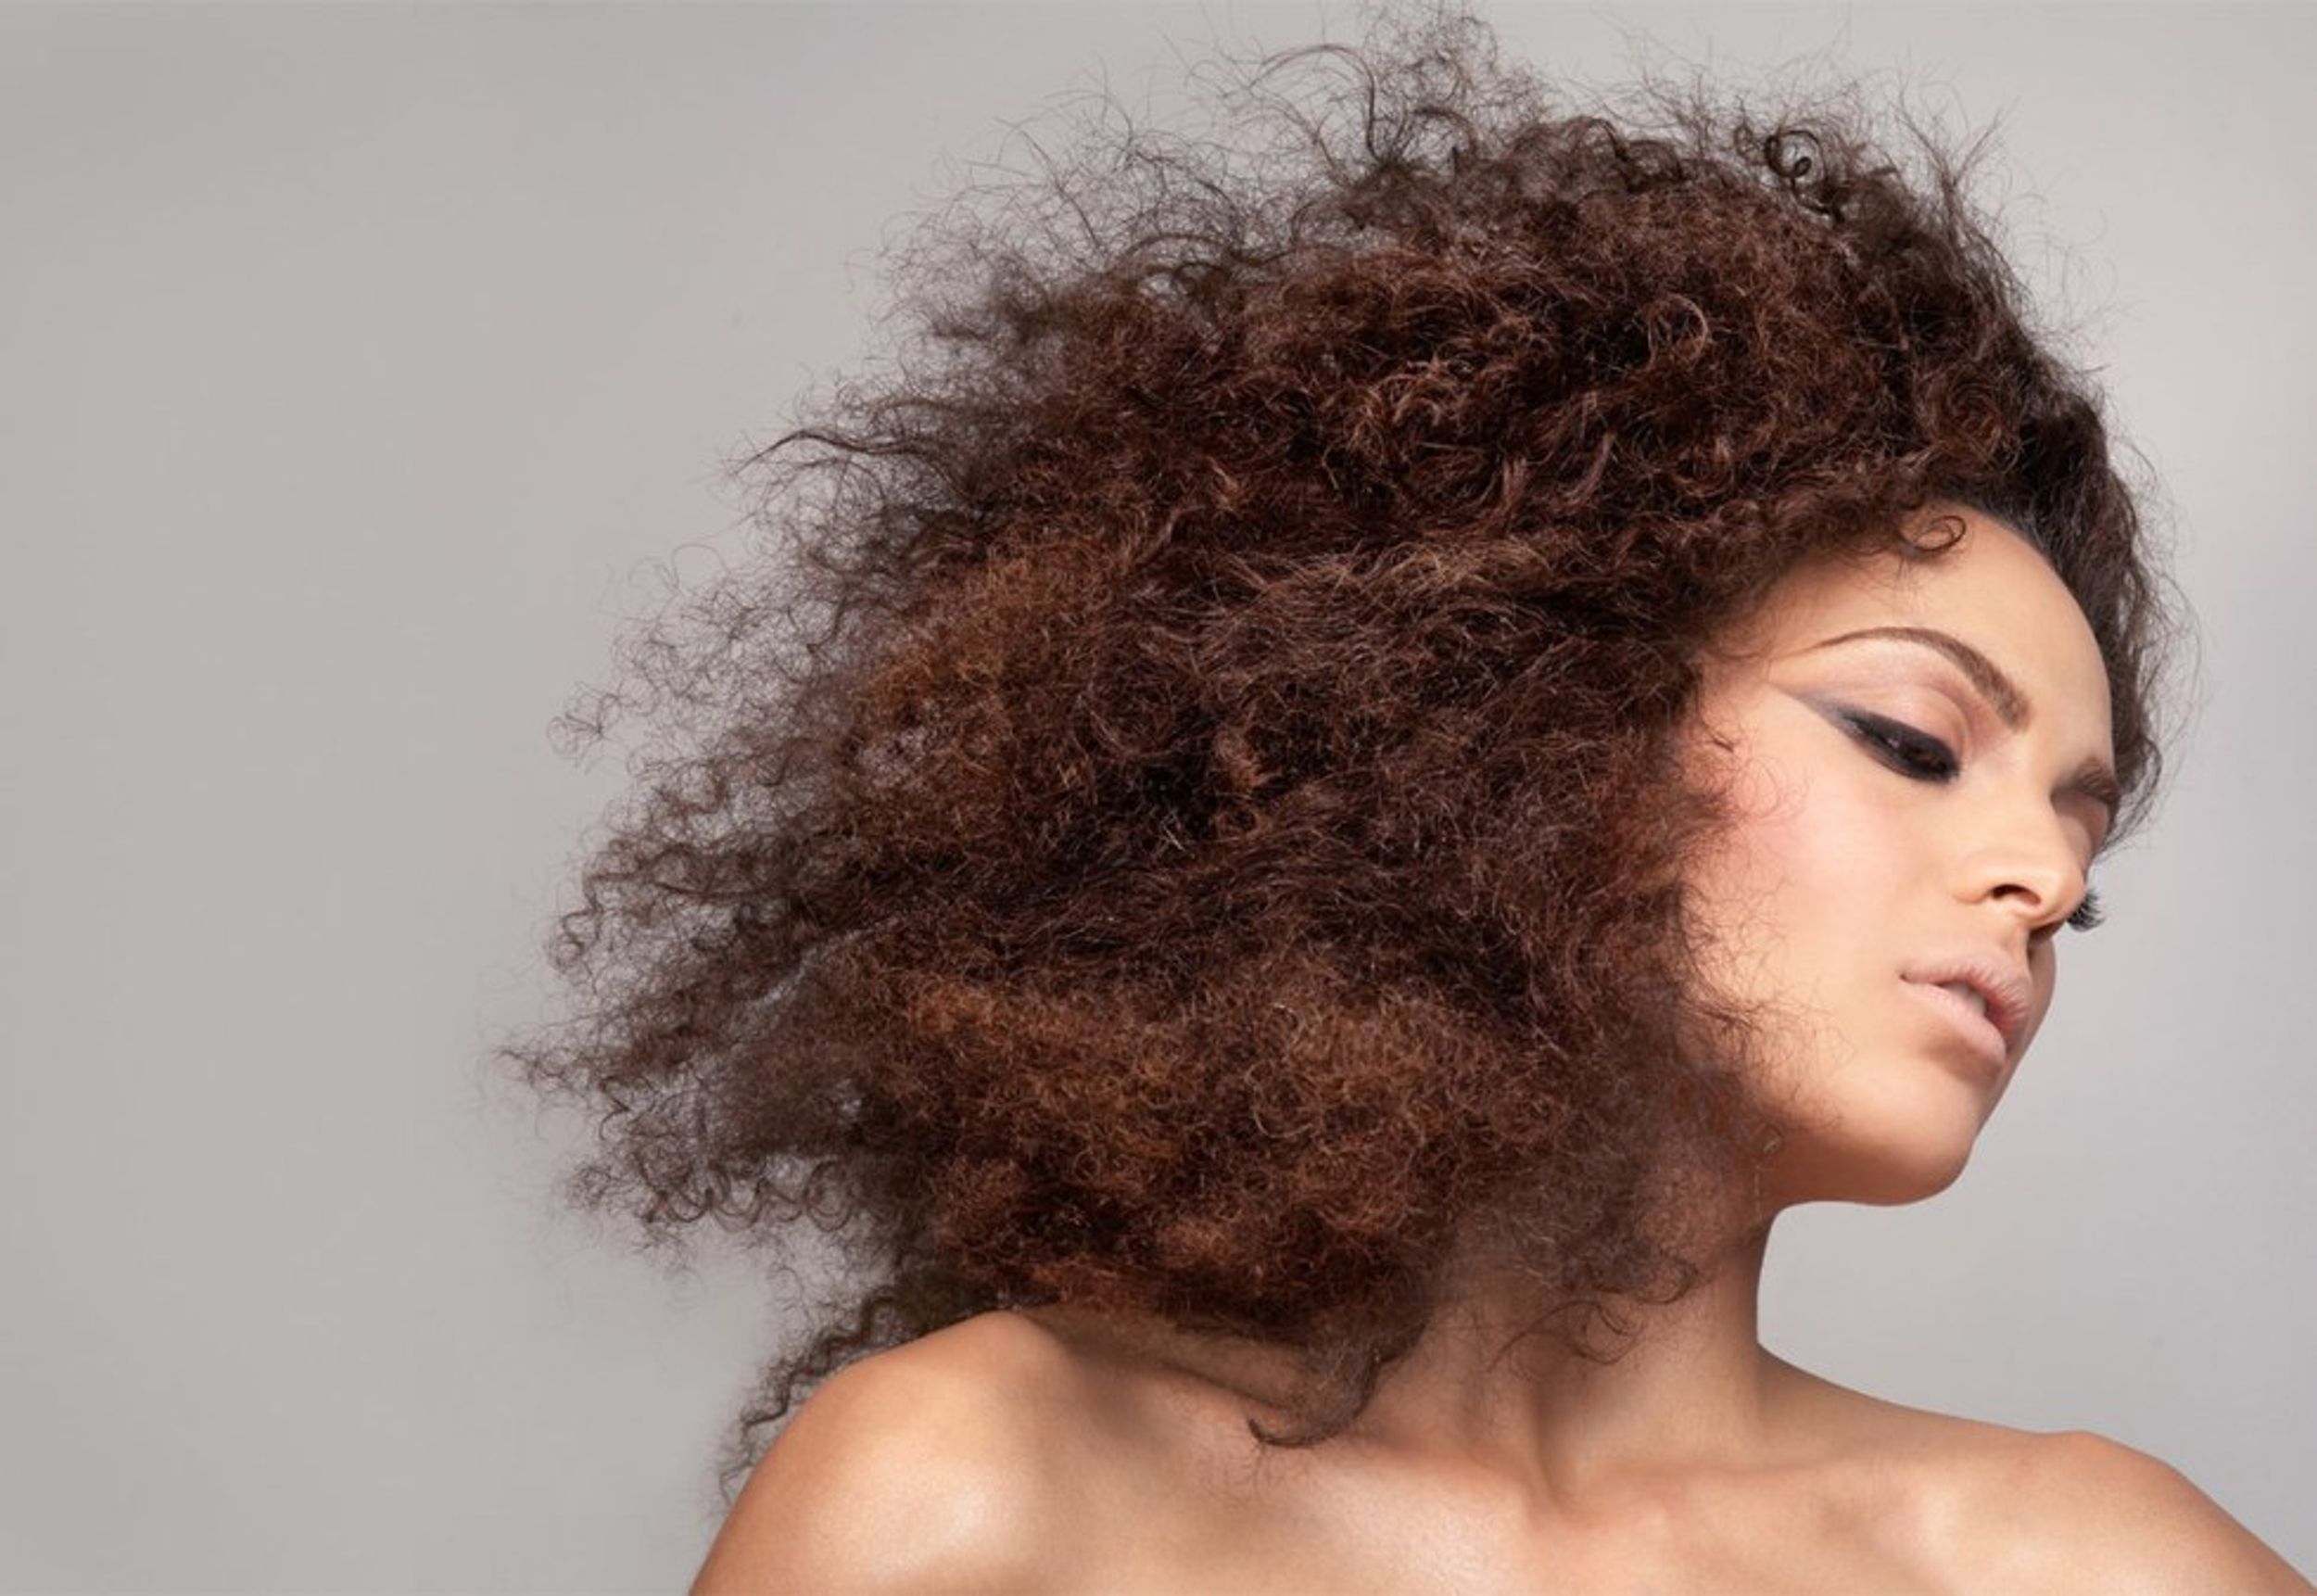 5 Struggles Of Having Curly Hair